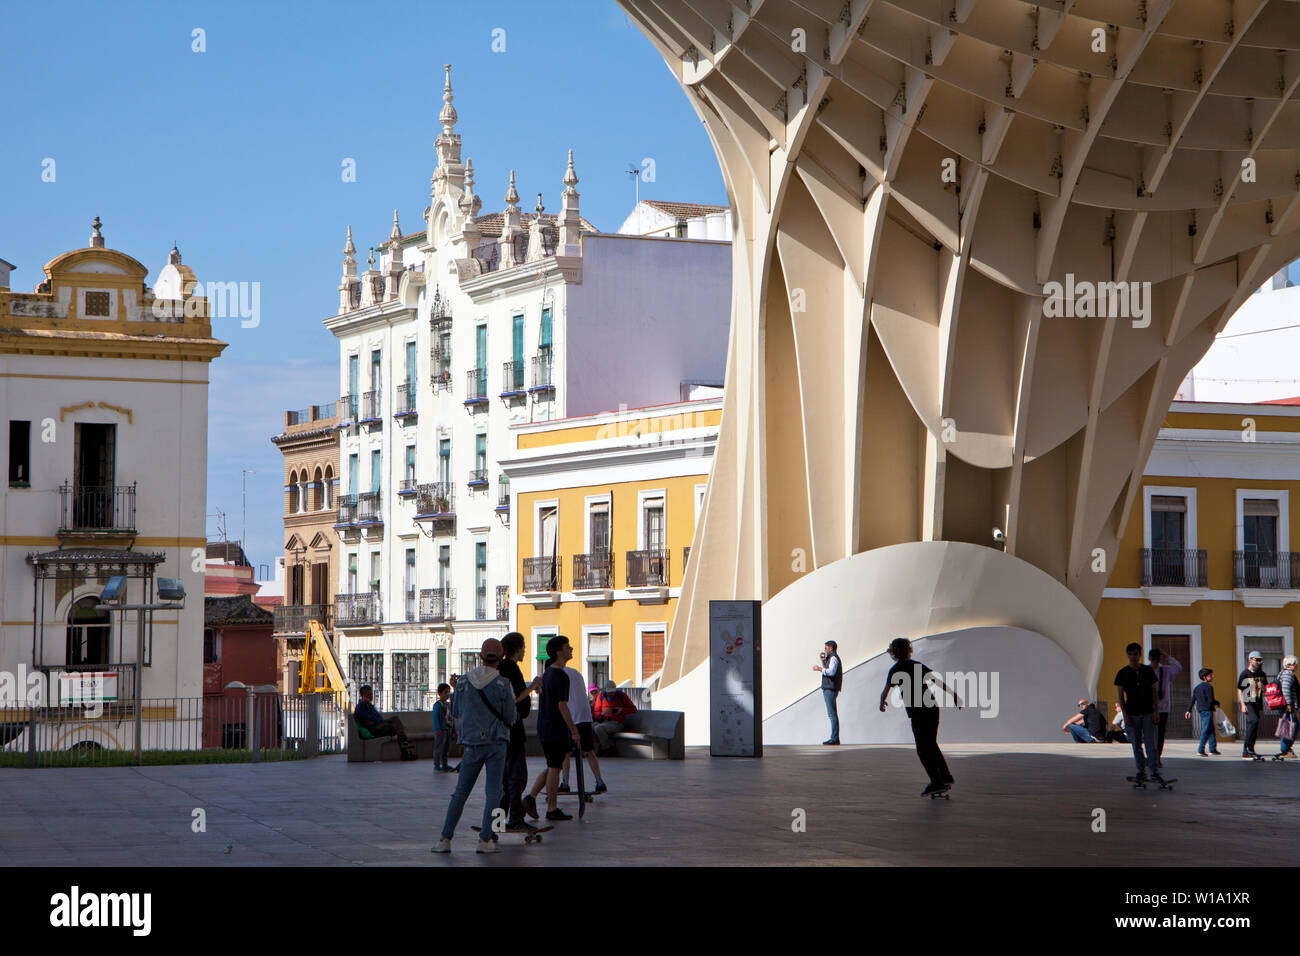 Skateboarders beneath the Metropol Parasol in the Plaza de la Encarnacion in Seville, Spain. Stock Photo